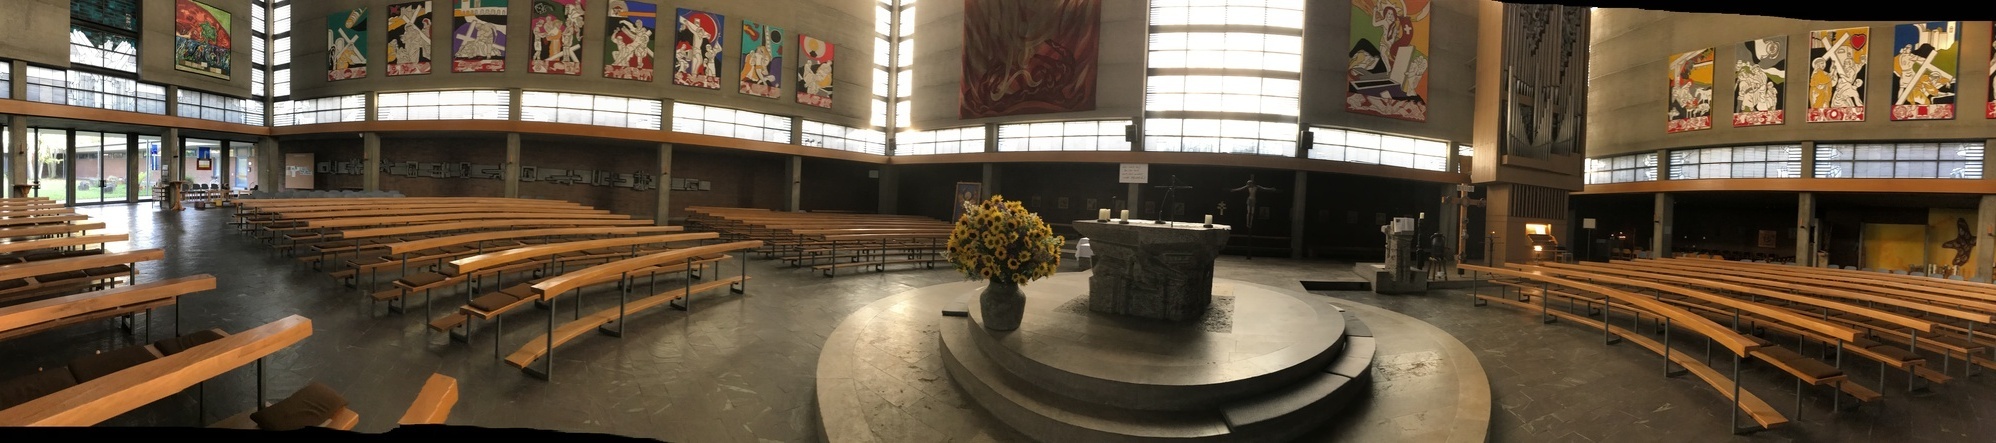 Altarraum St. Michael